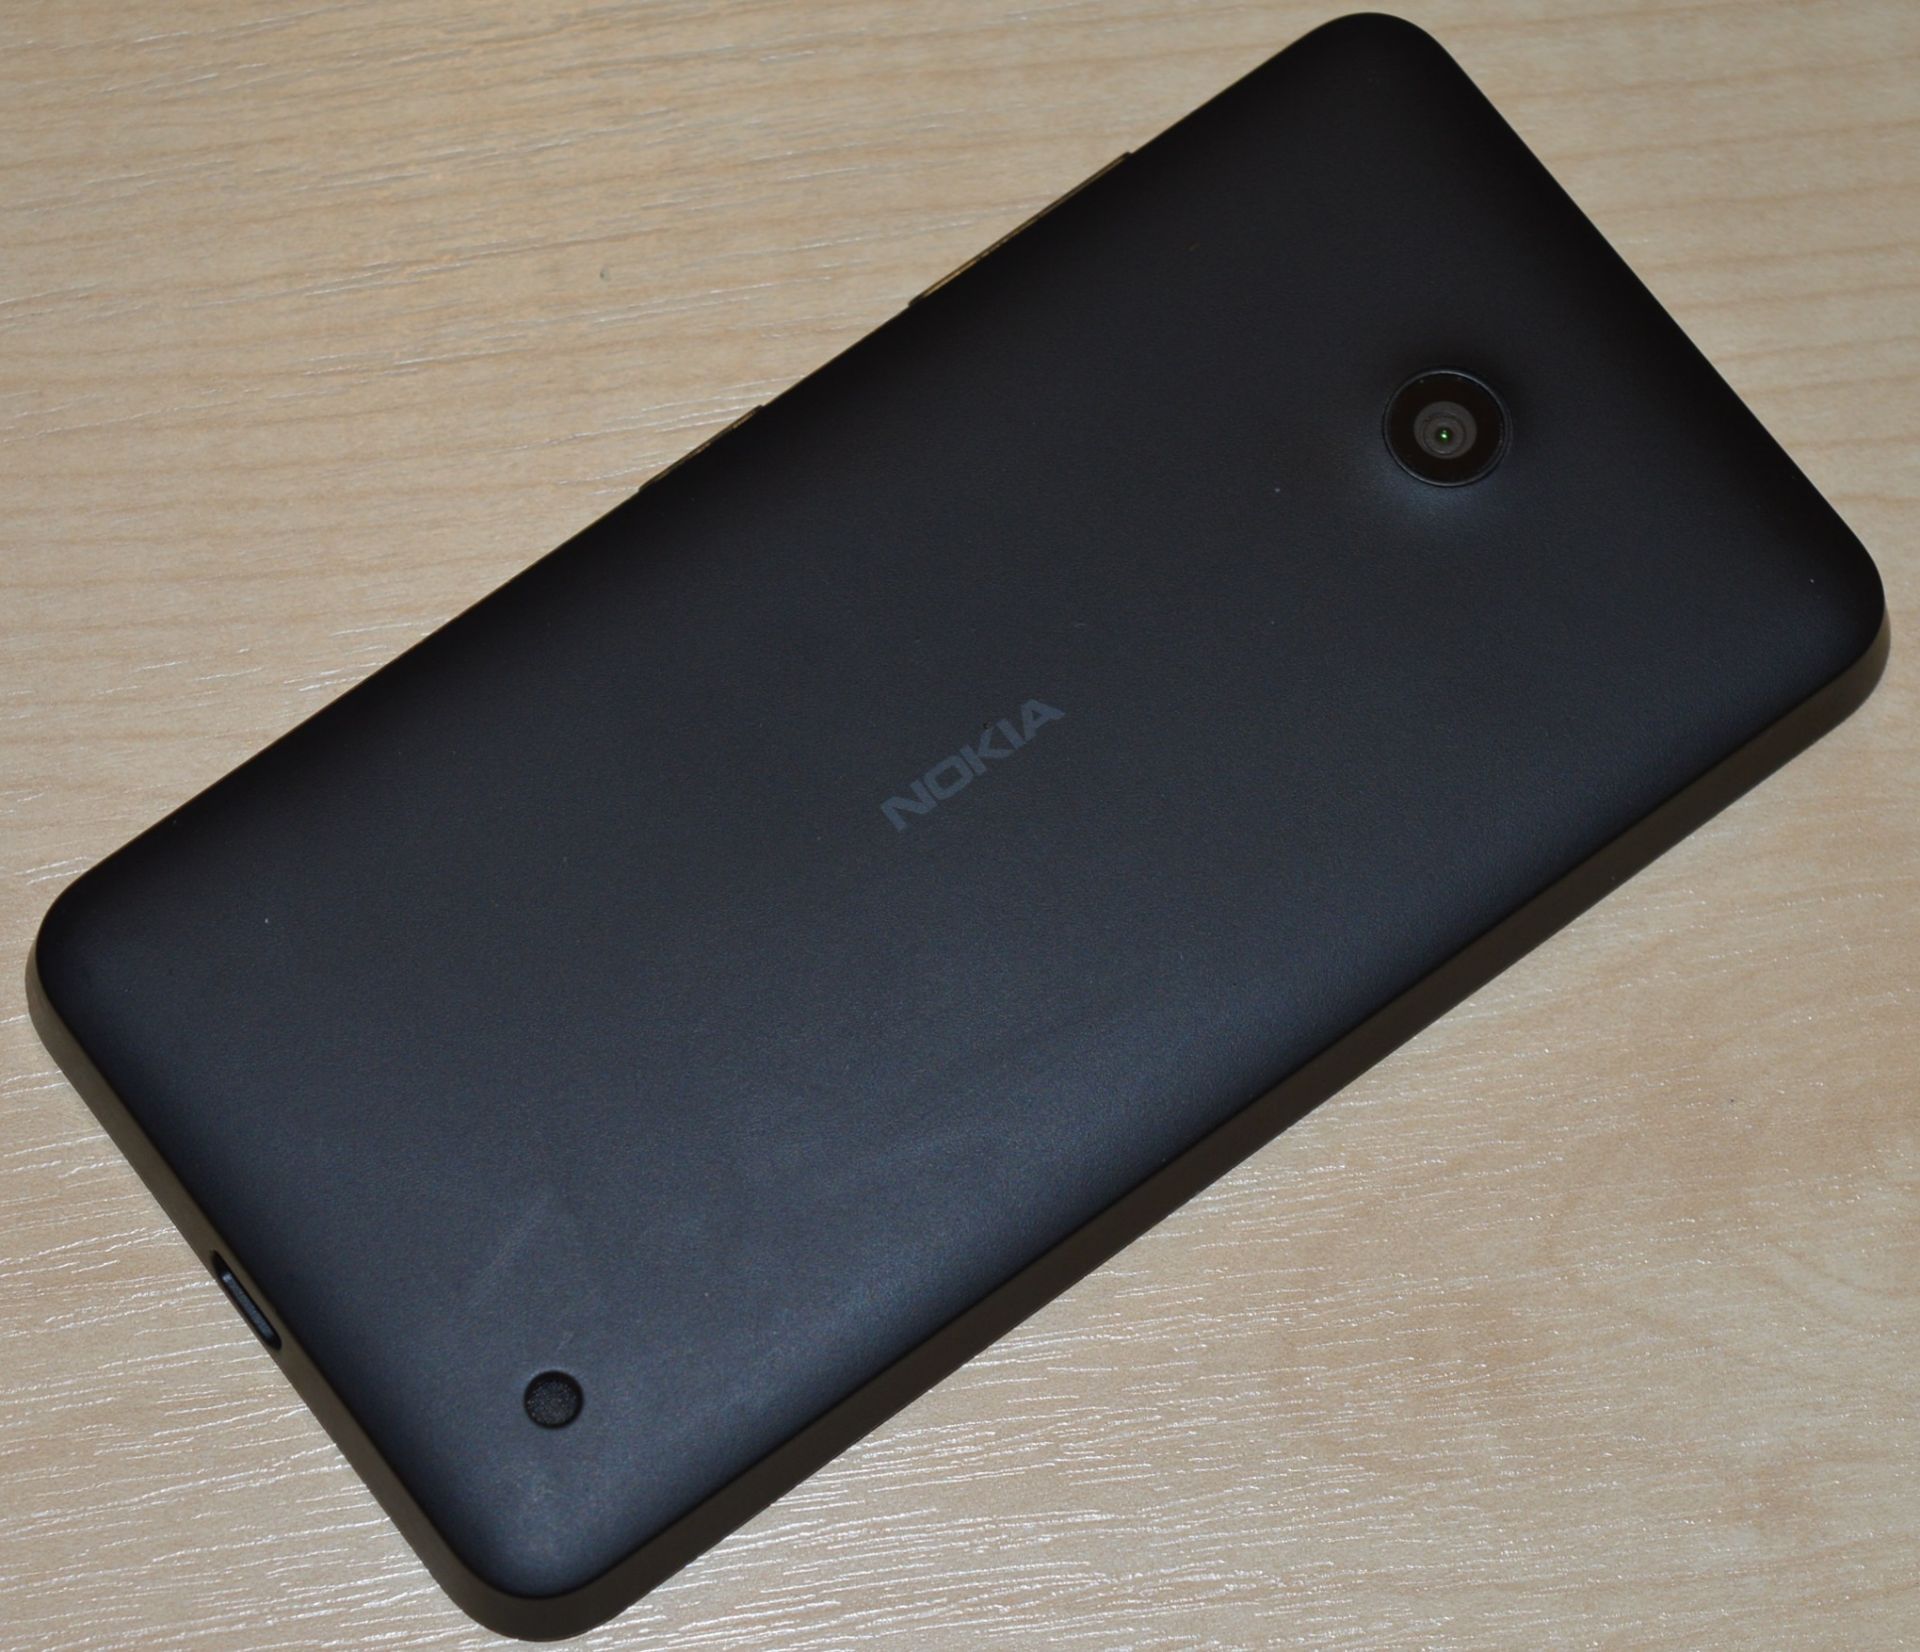 1 x Nokia Lumia 630 Mobile Smart Phone - Features Microsoft Windows 8.1 OS, 1.2ghz Quad Core CPU, - Image 2 of 2